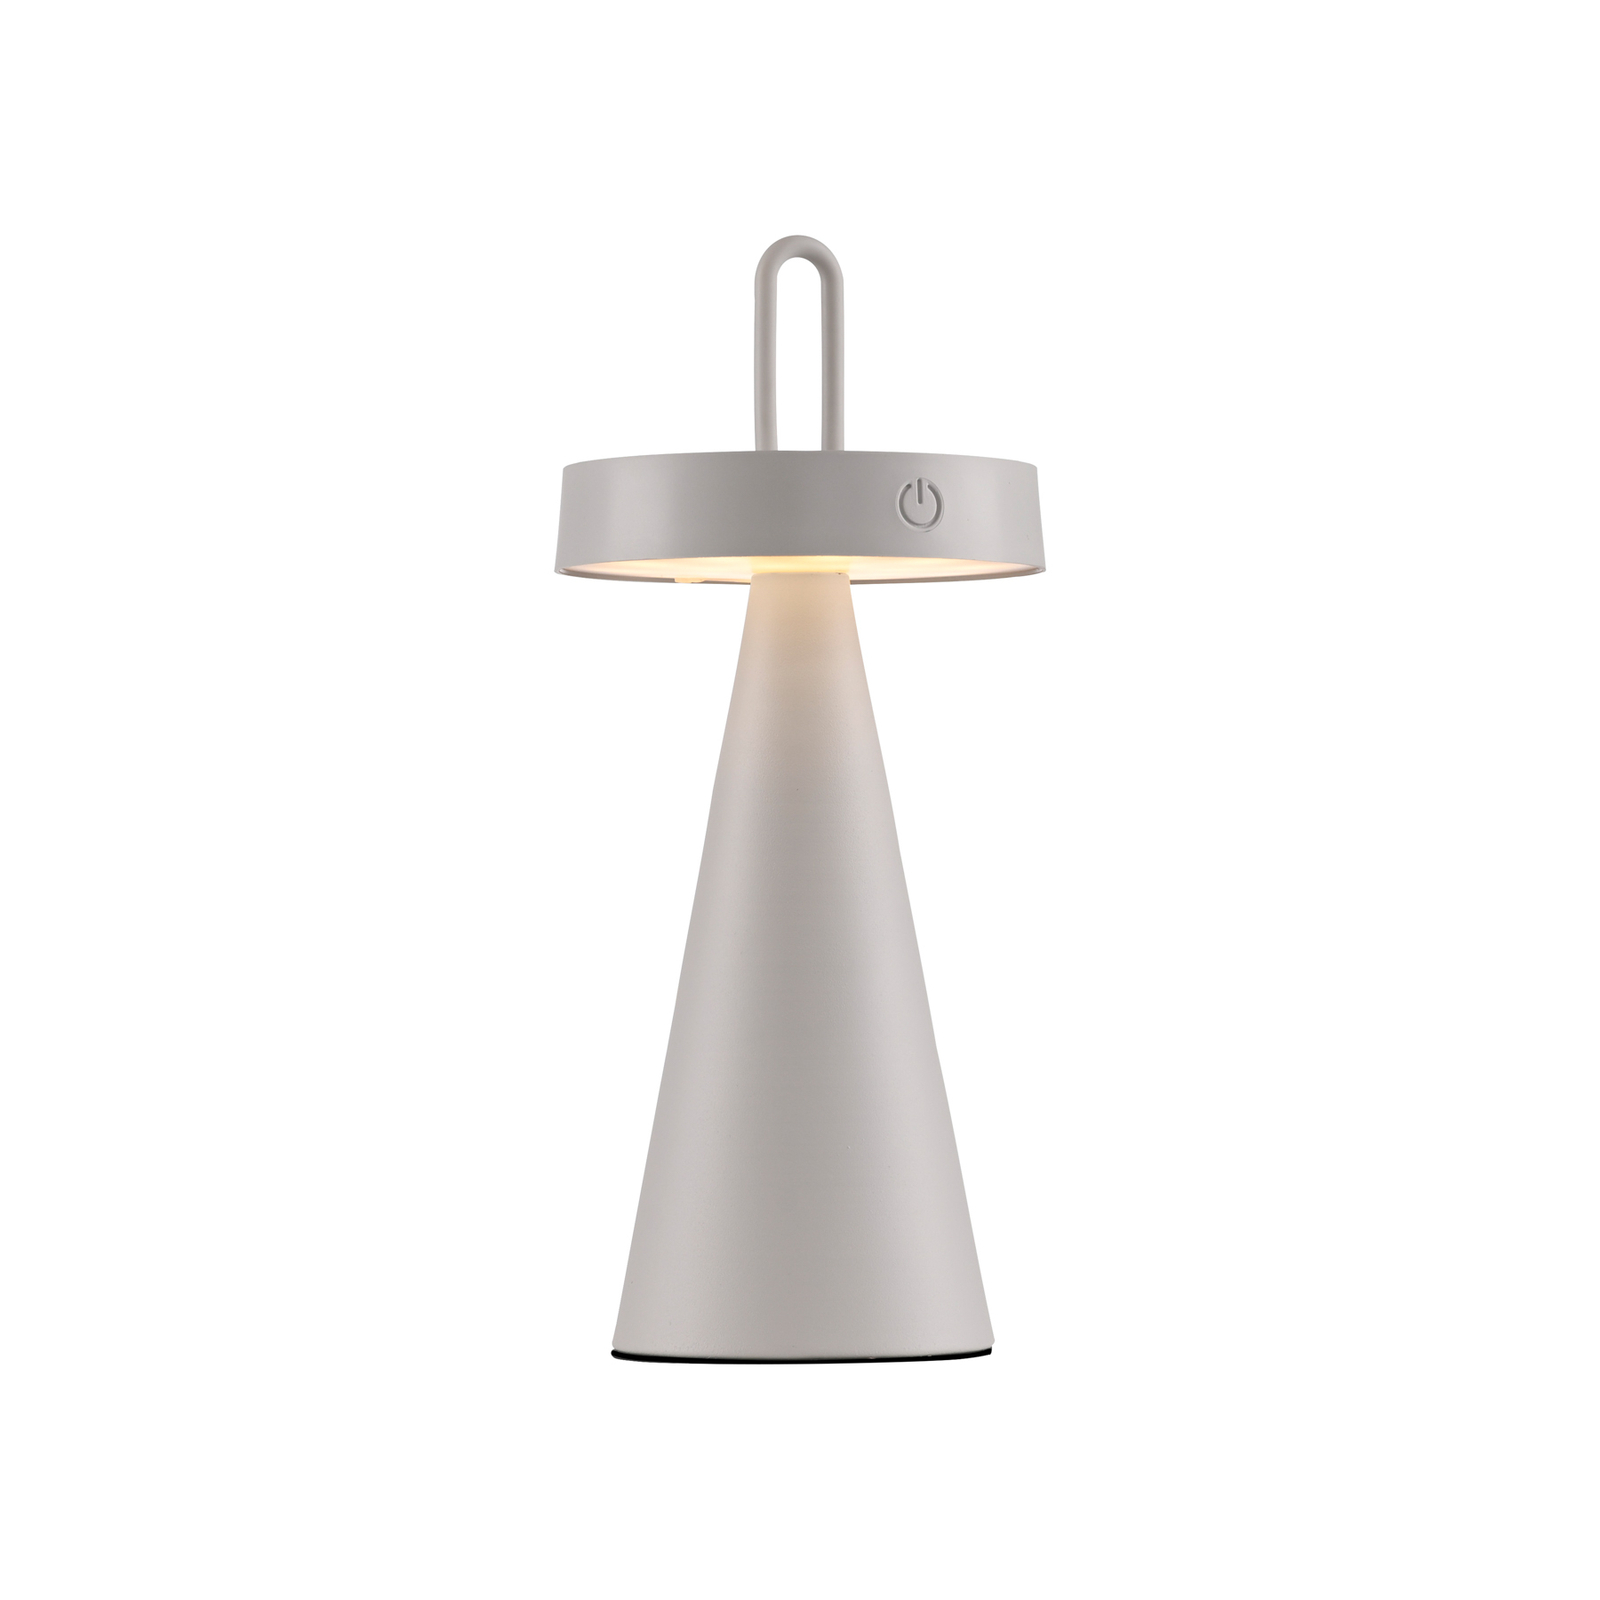 JUST LIGHT. Lampada da tavolo LED Alwa grigio-beige in ferro IP44